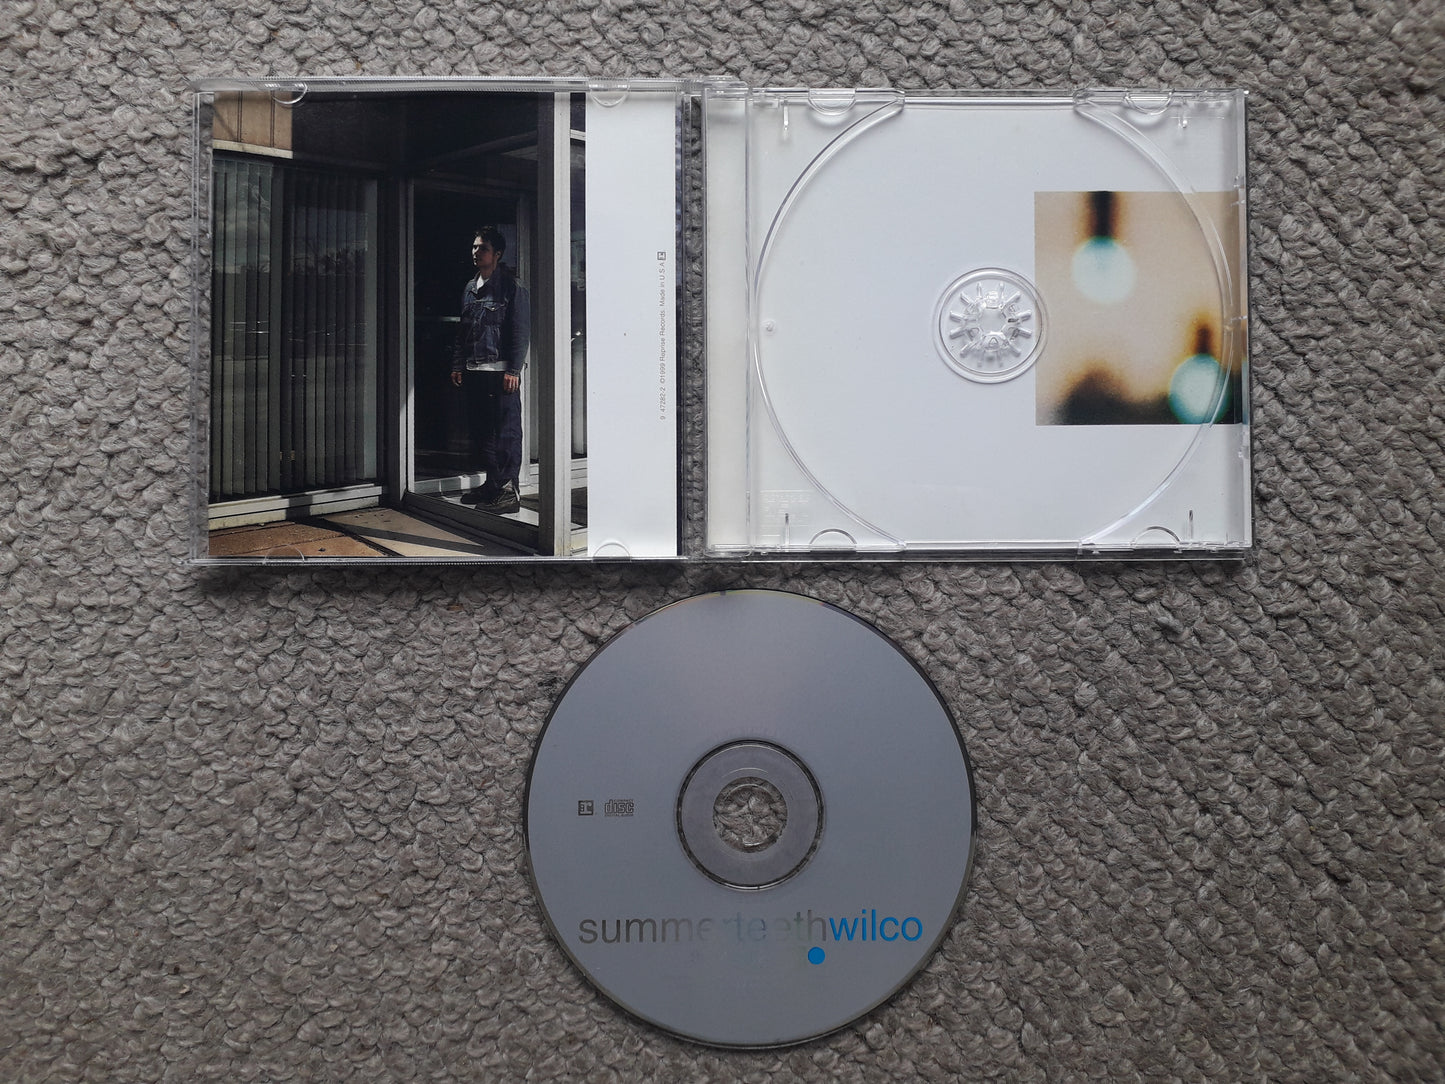 Wilco-Summerteeth CD (47282-2)